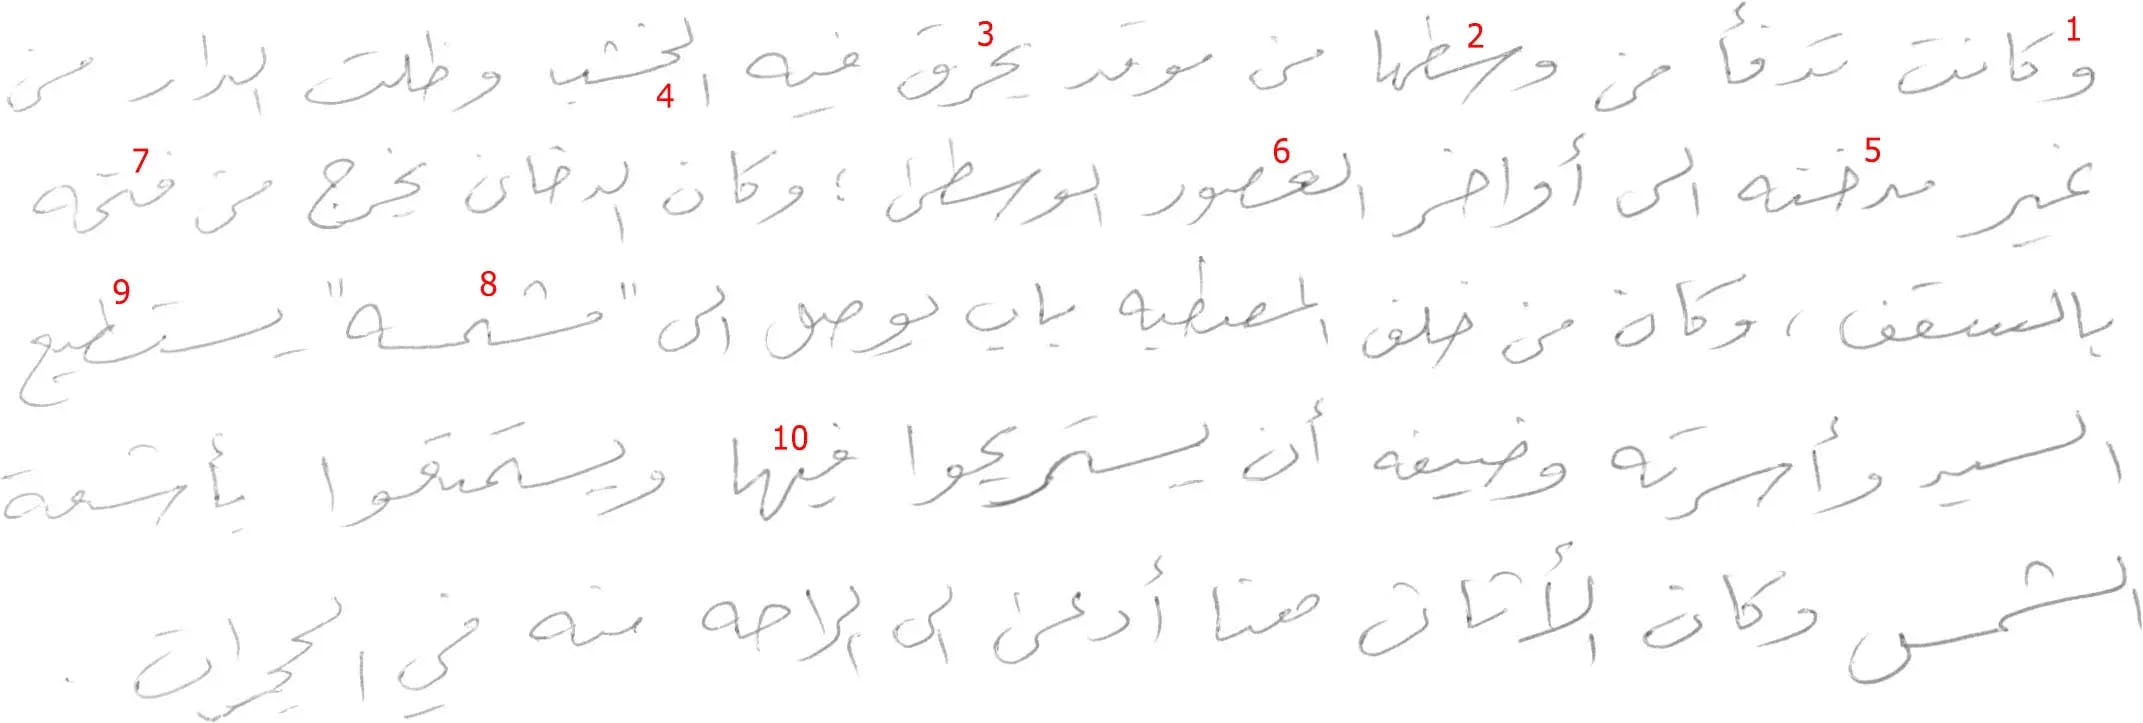 arabic-handwriting-03